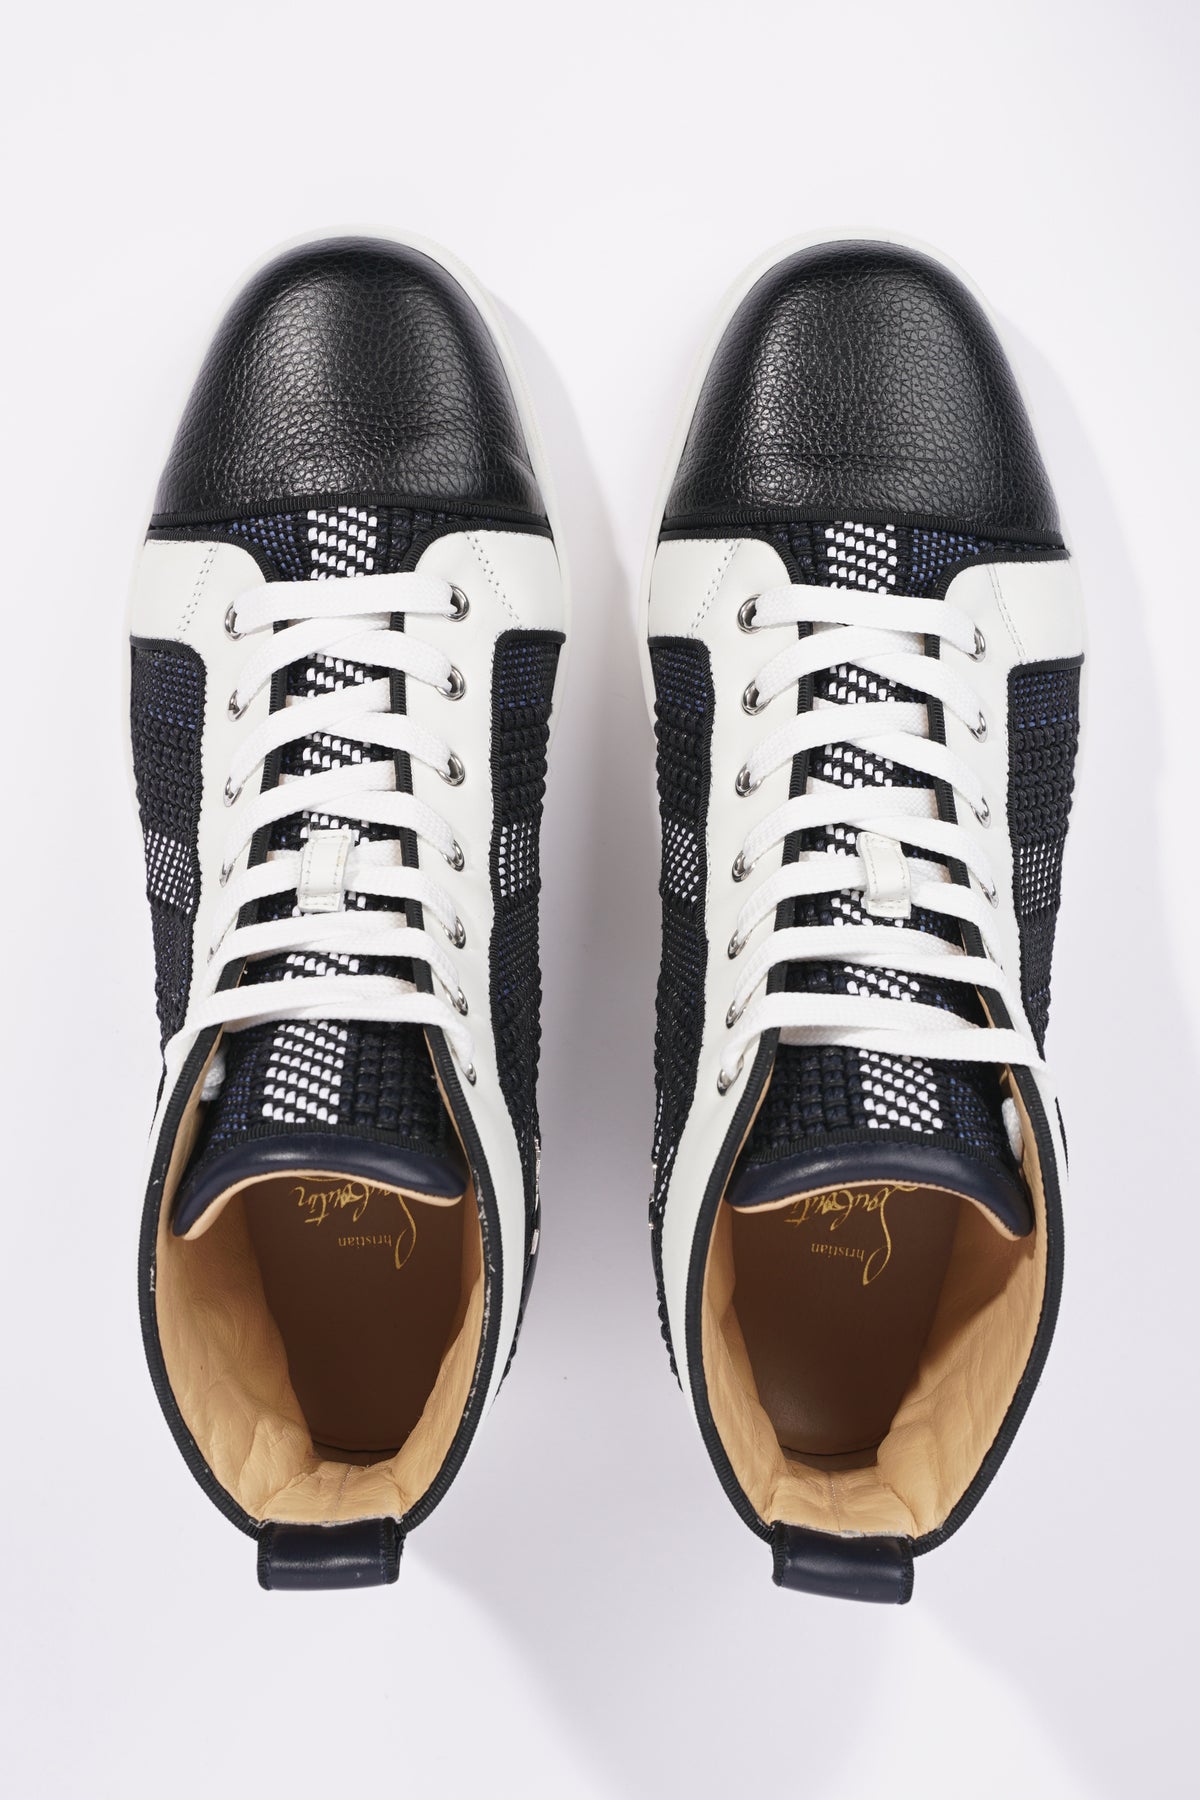 Christian Louboutin Navy Coolito Man Black - Mens Shoes - Size 43.5